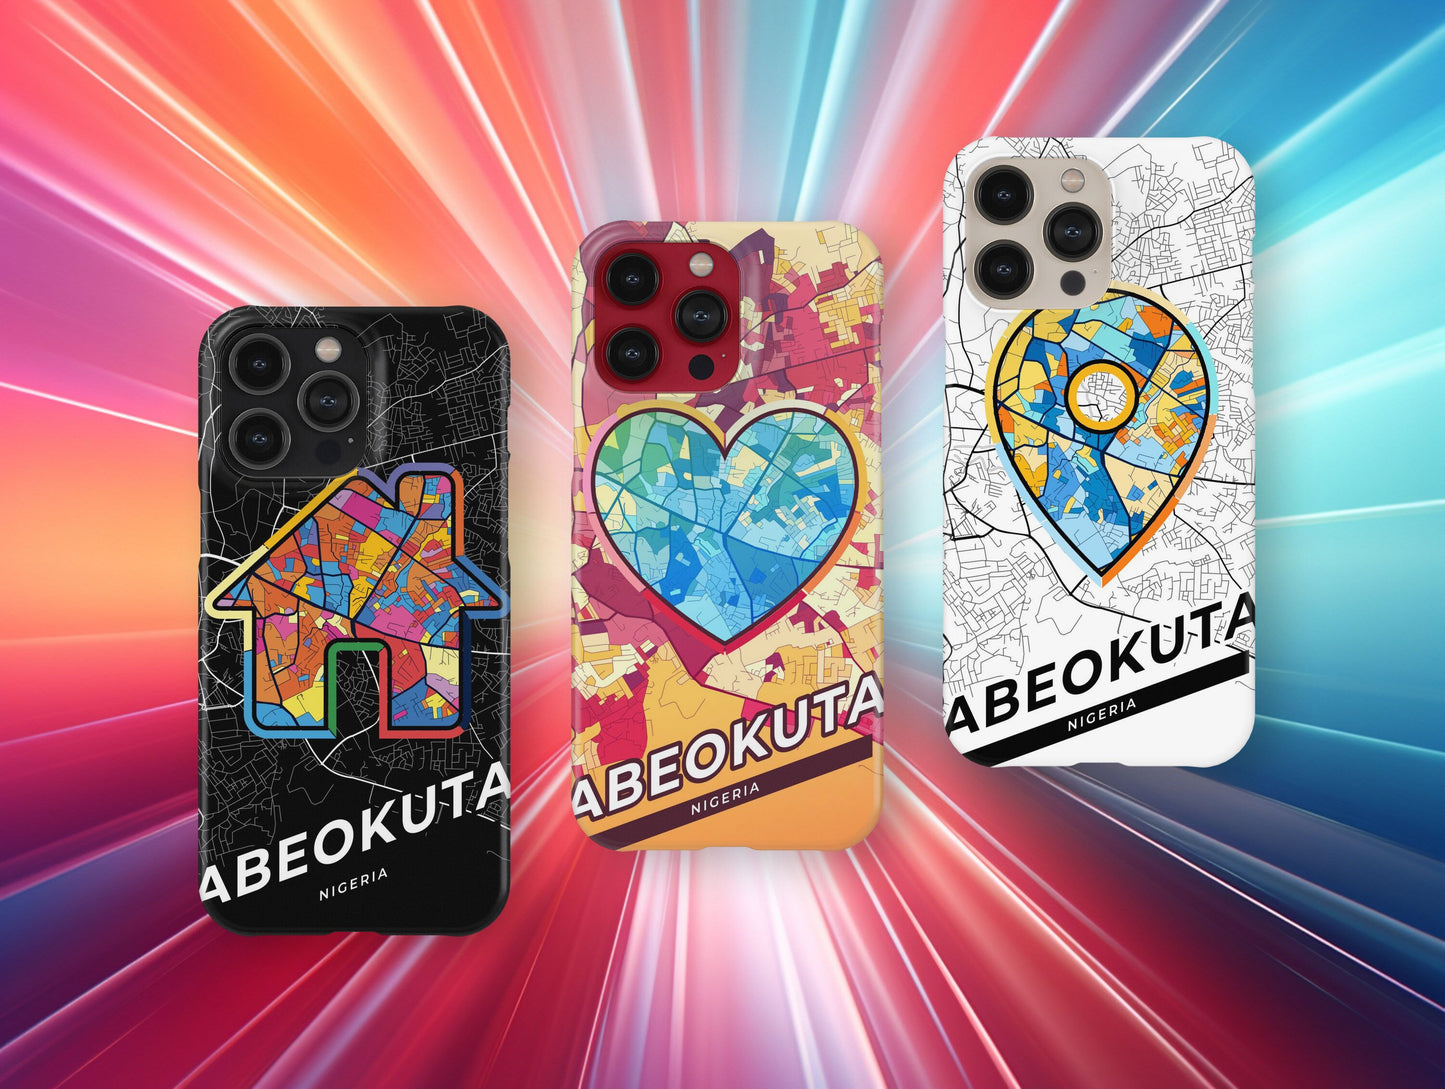 Abeokuta Nigeria slim phone case with colorful icon. Birthday, wedding or housewarming gift. Couple match cases.